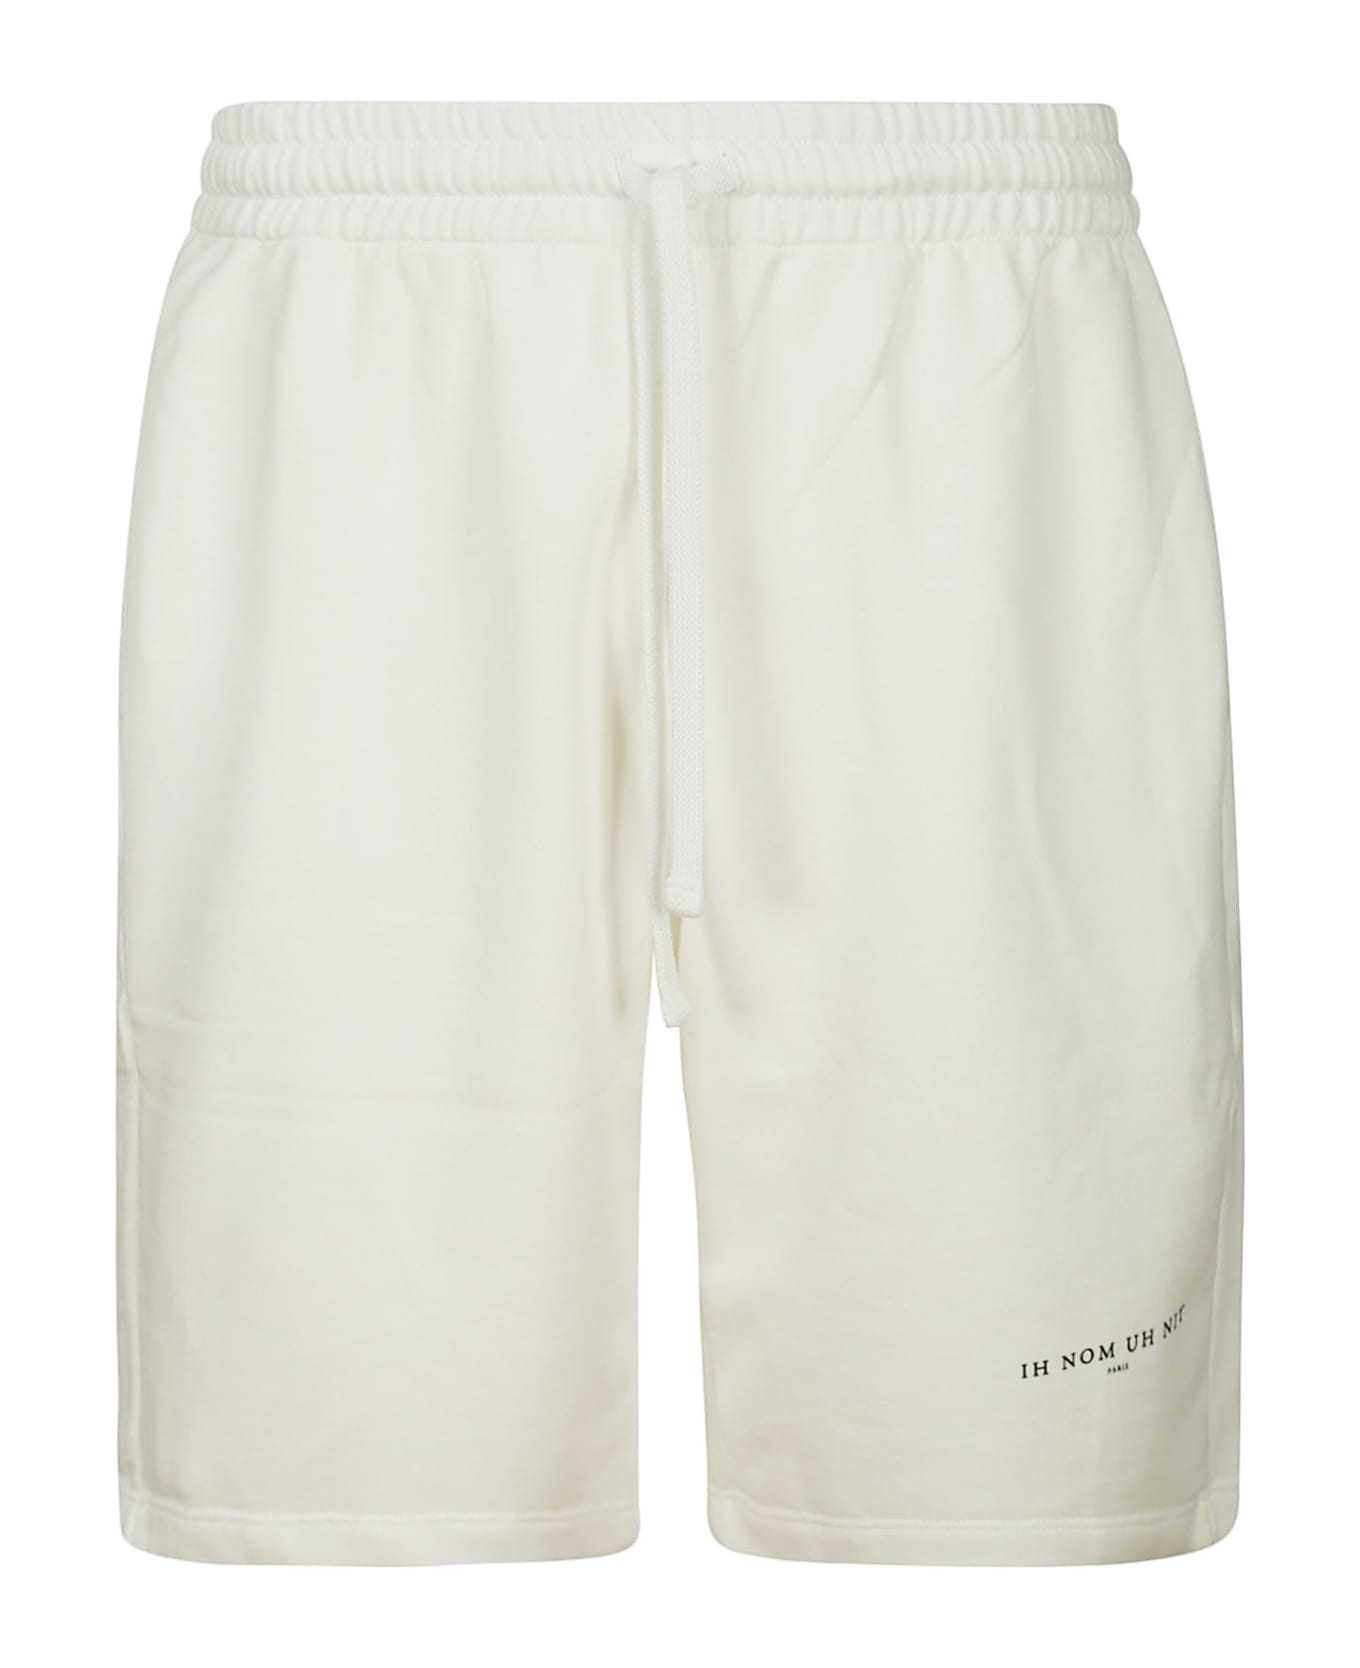 ih nom uh nit Shorts With Logo Small On Left Leg - Off White